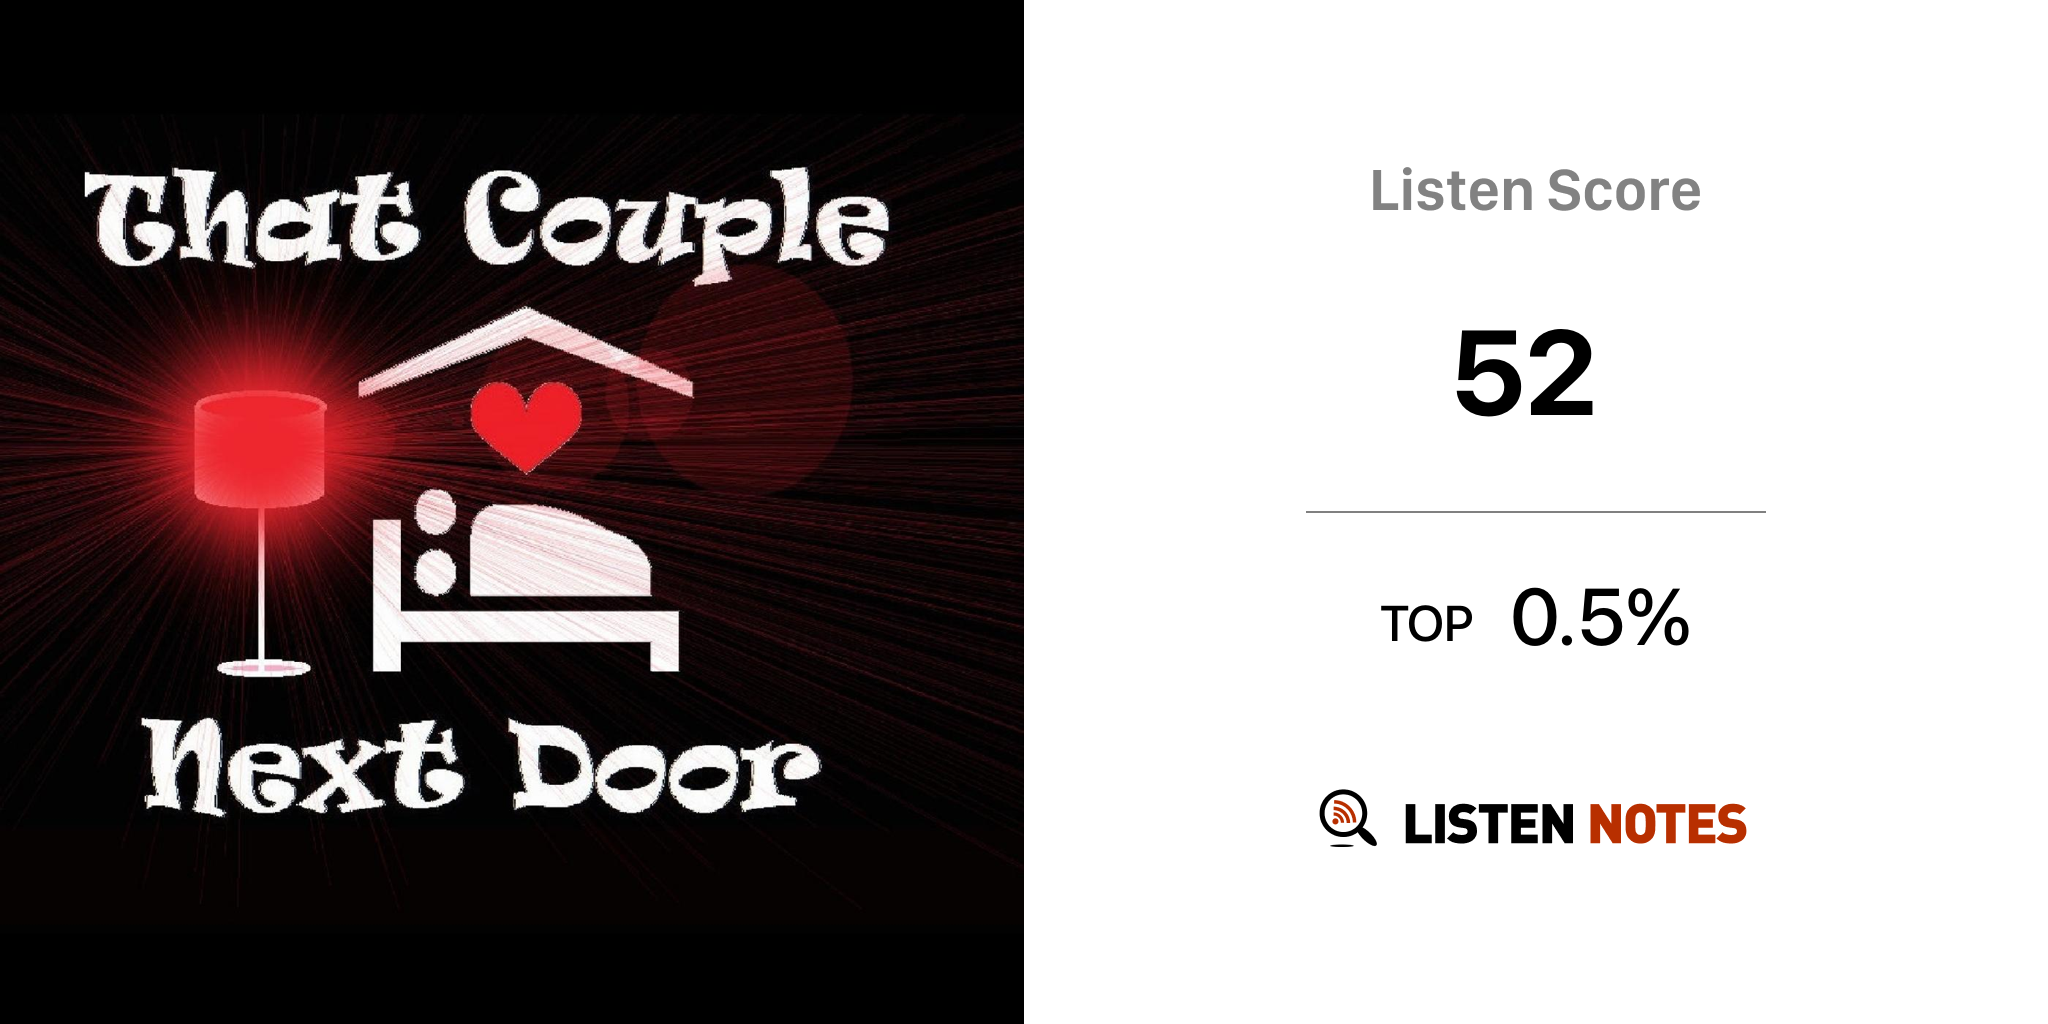 Couple podcast the next door Episode 65